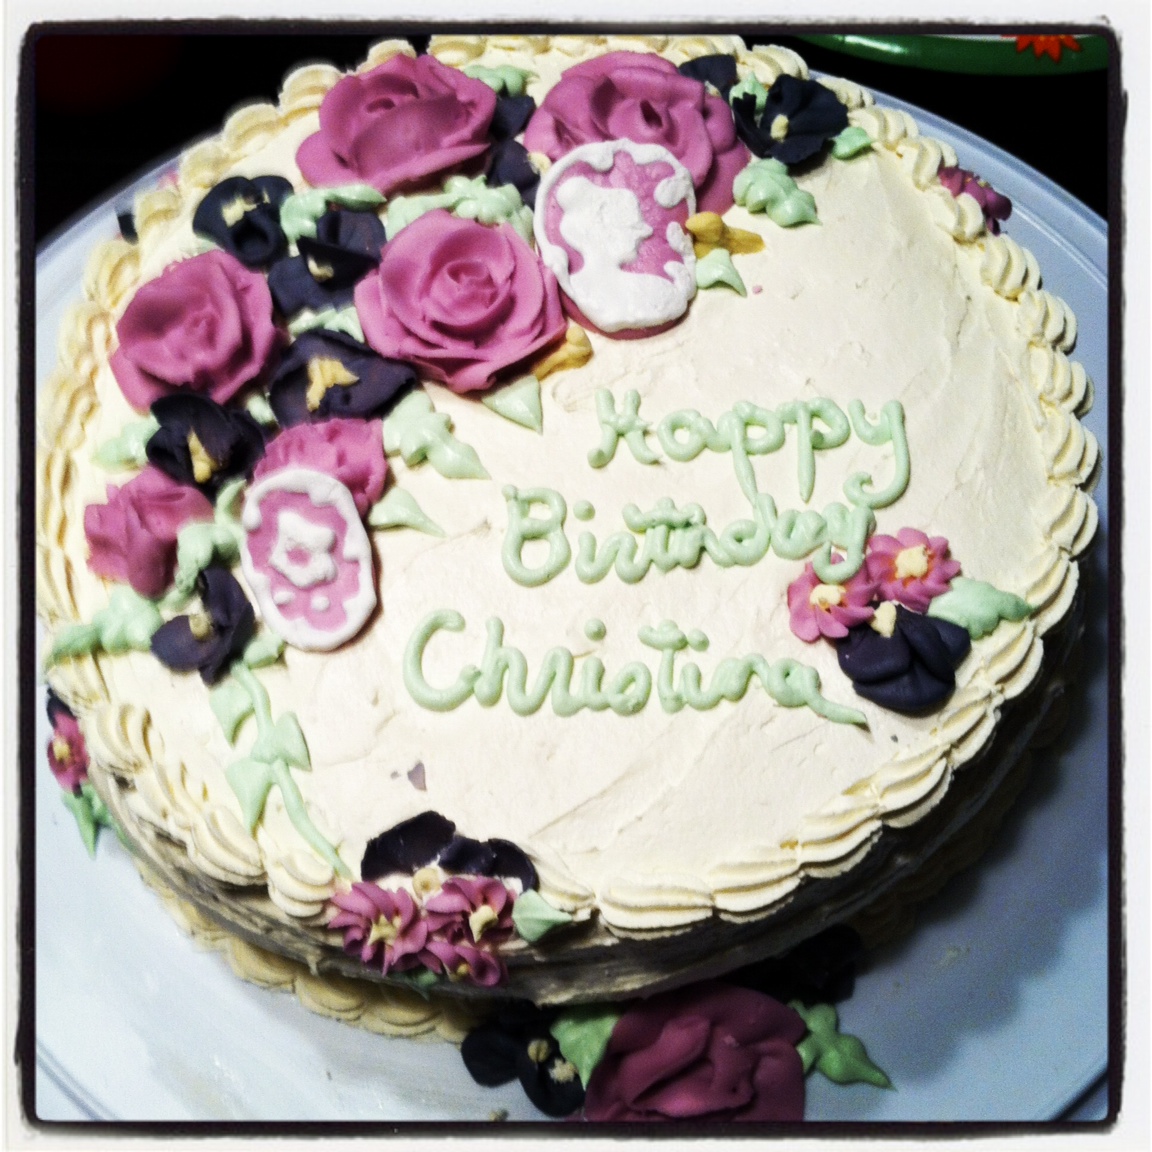 Doll figurine birthday Cake - Decorated Cake by Christina - CakesDecor